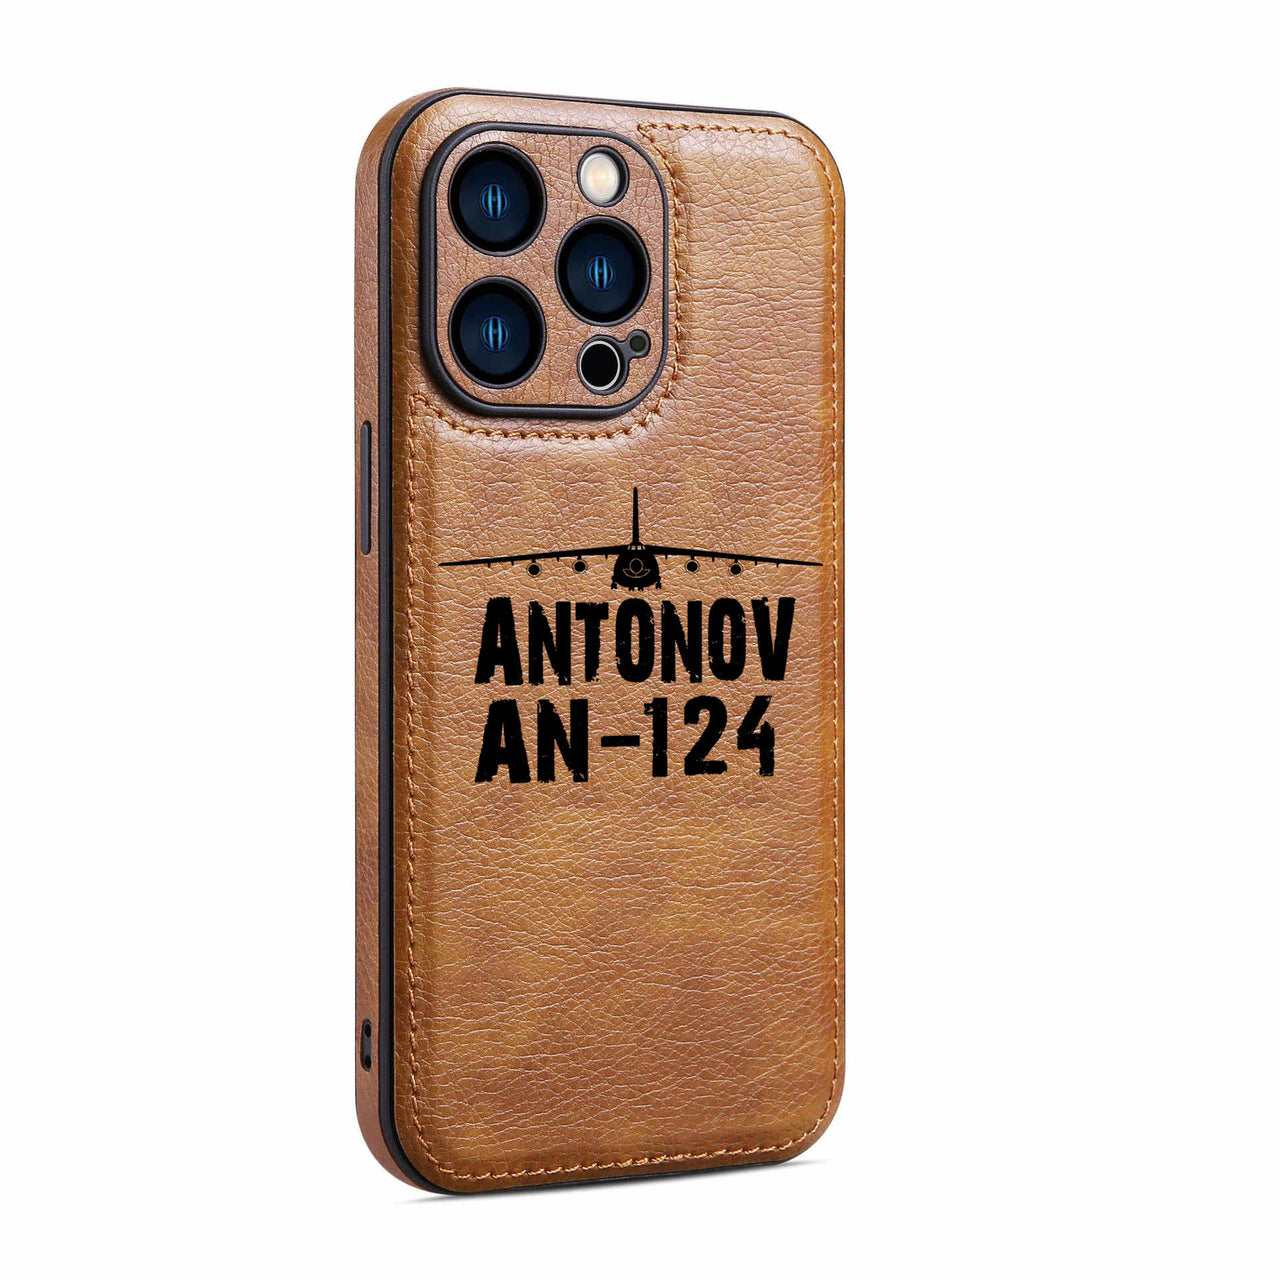 Antonov AN-124 & Plane Designed Leather iPhone Cases